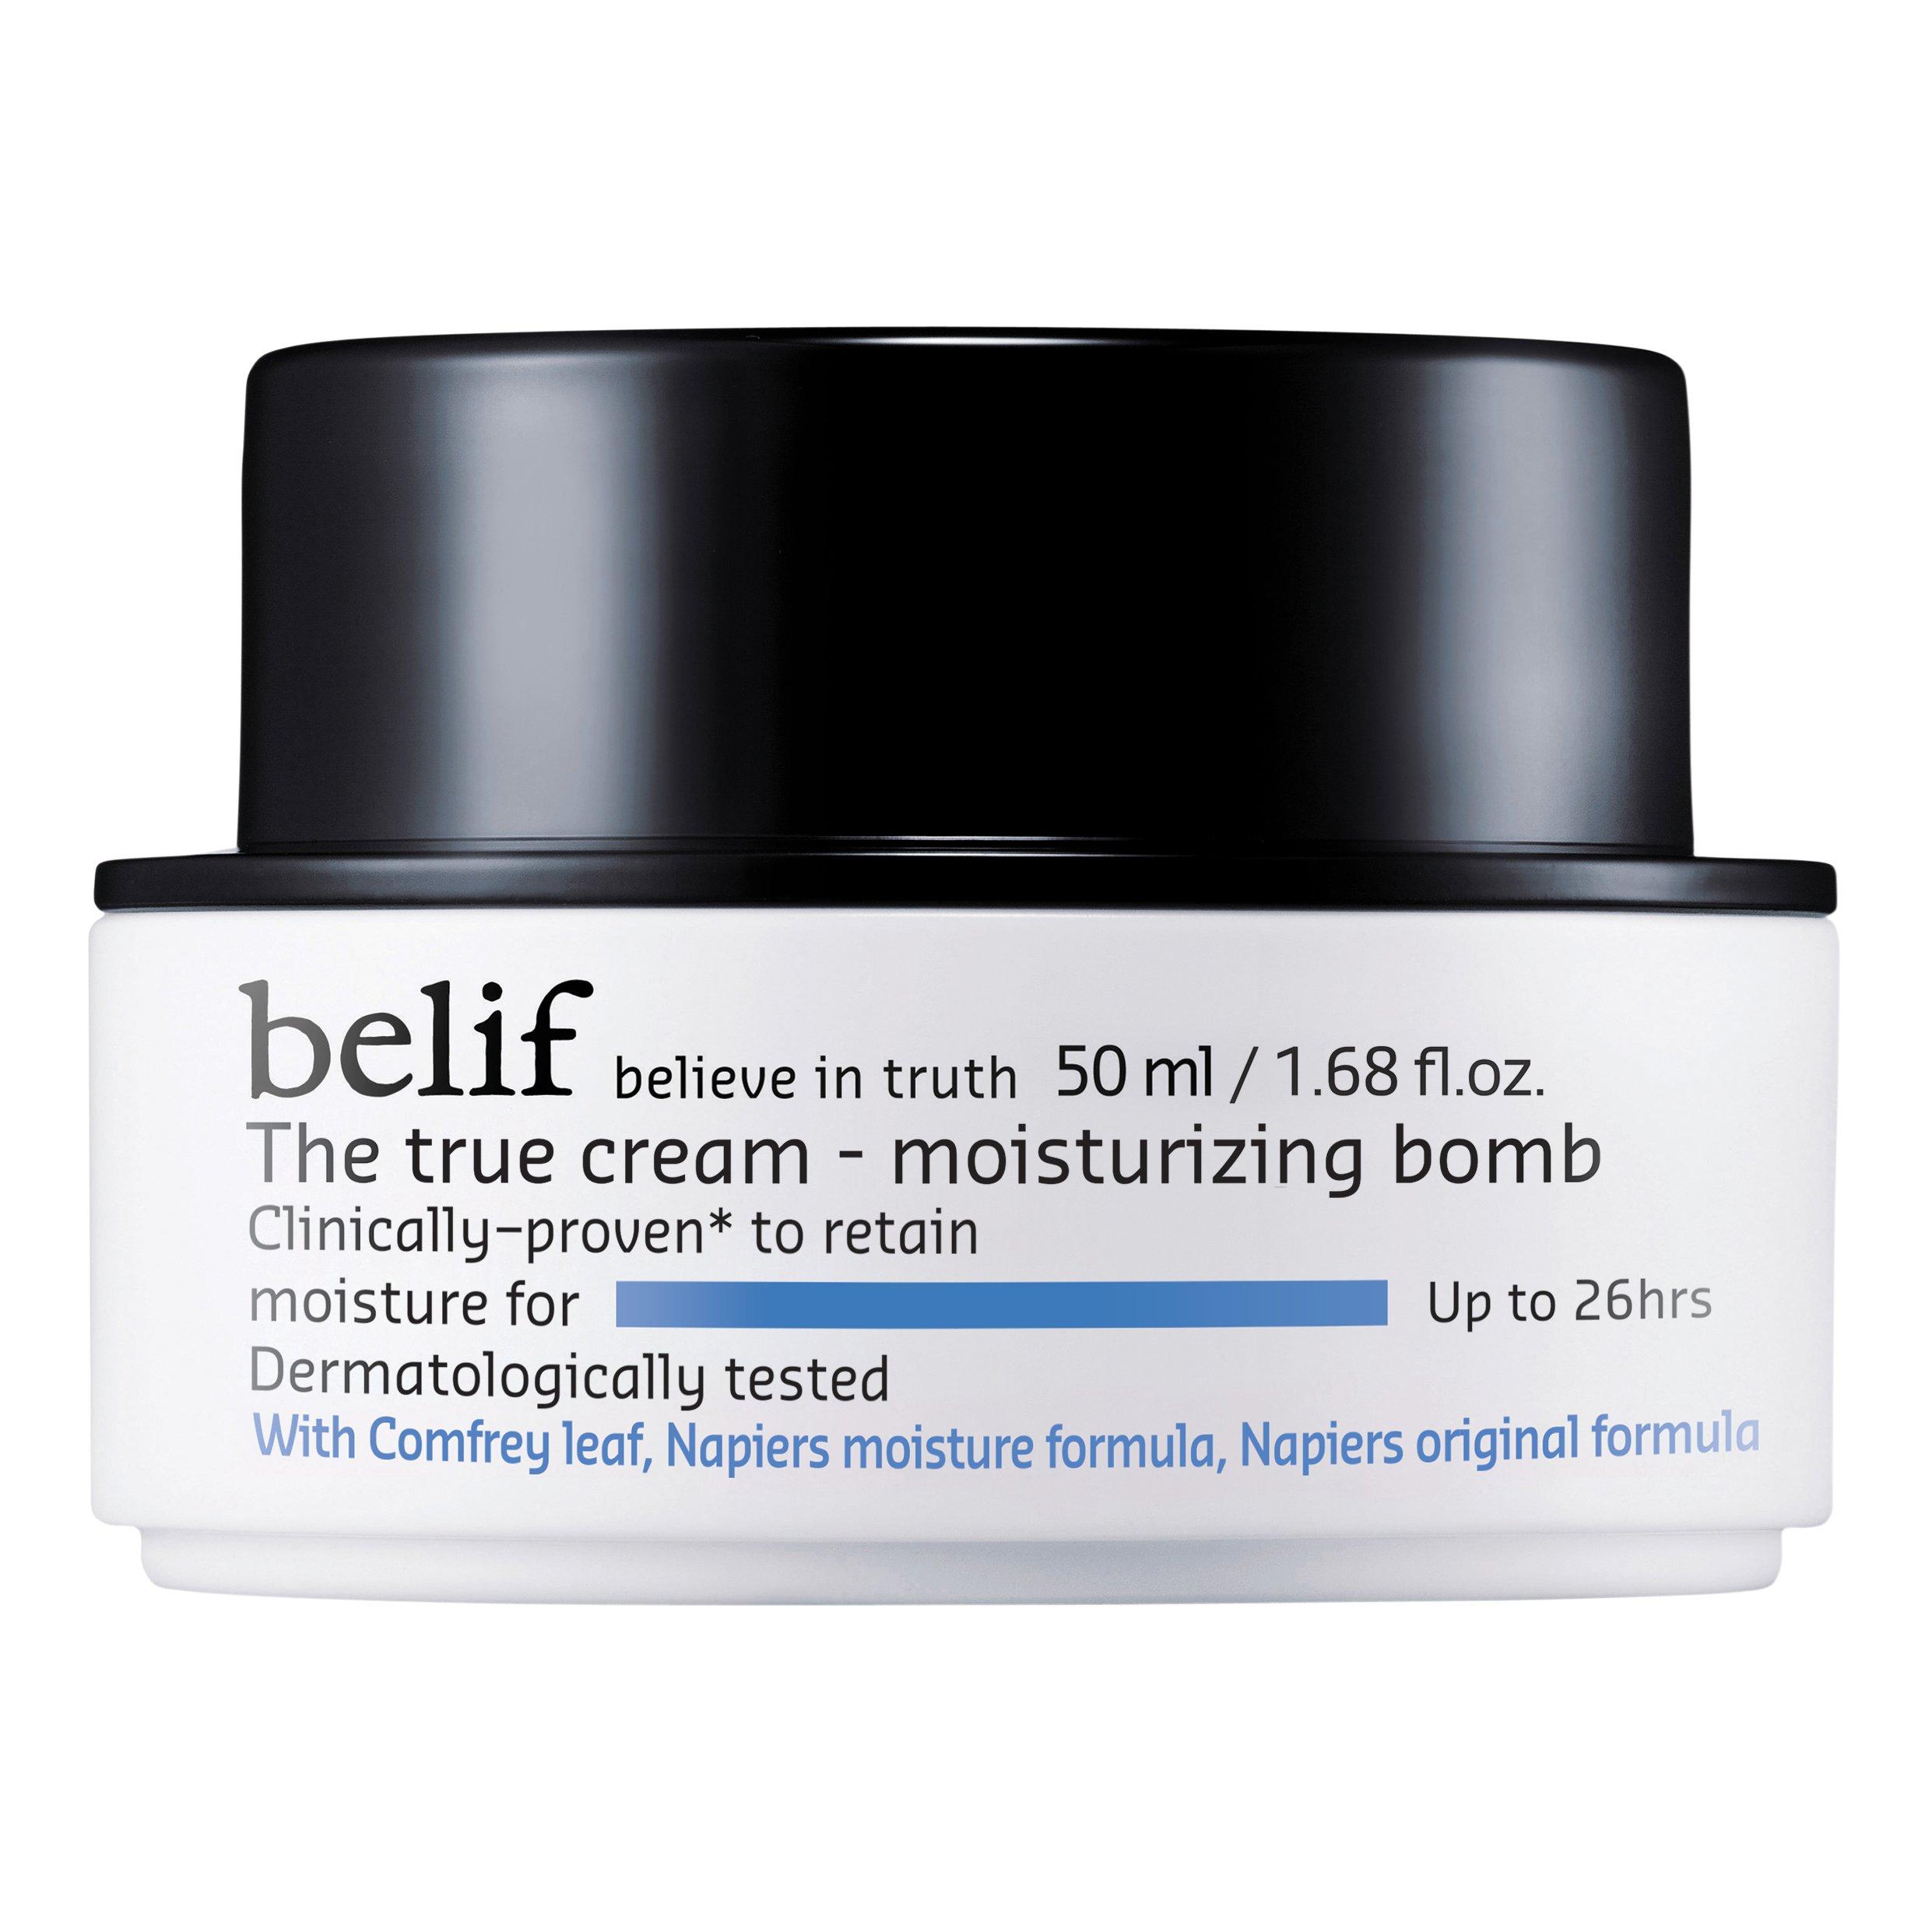 Image of belif The True Cream - Moisturizing Bomb - The True Cream - Moisturizing Bomb